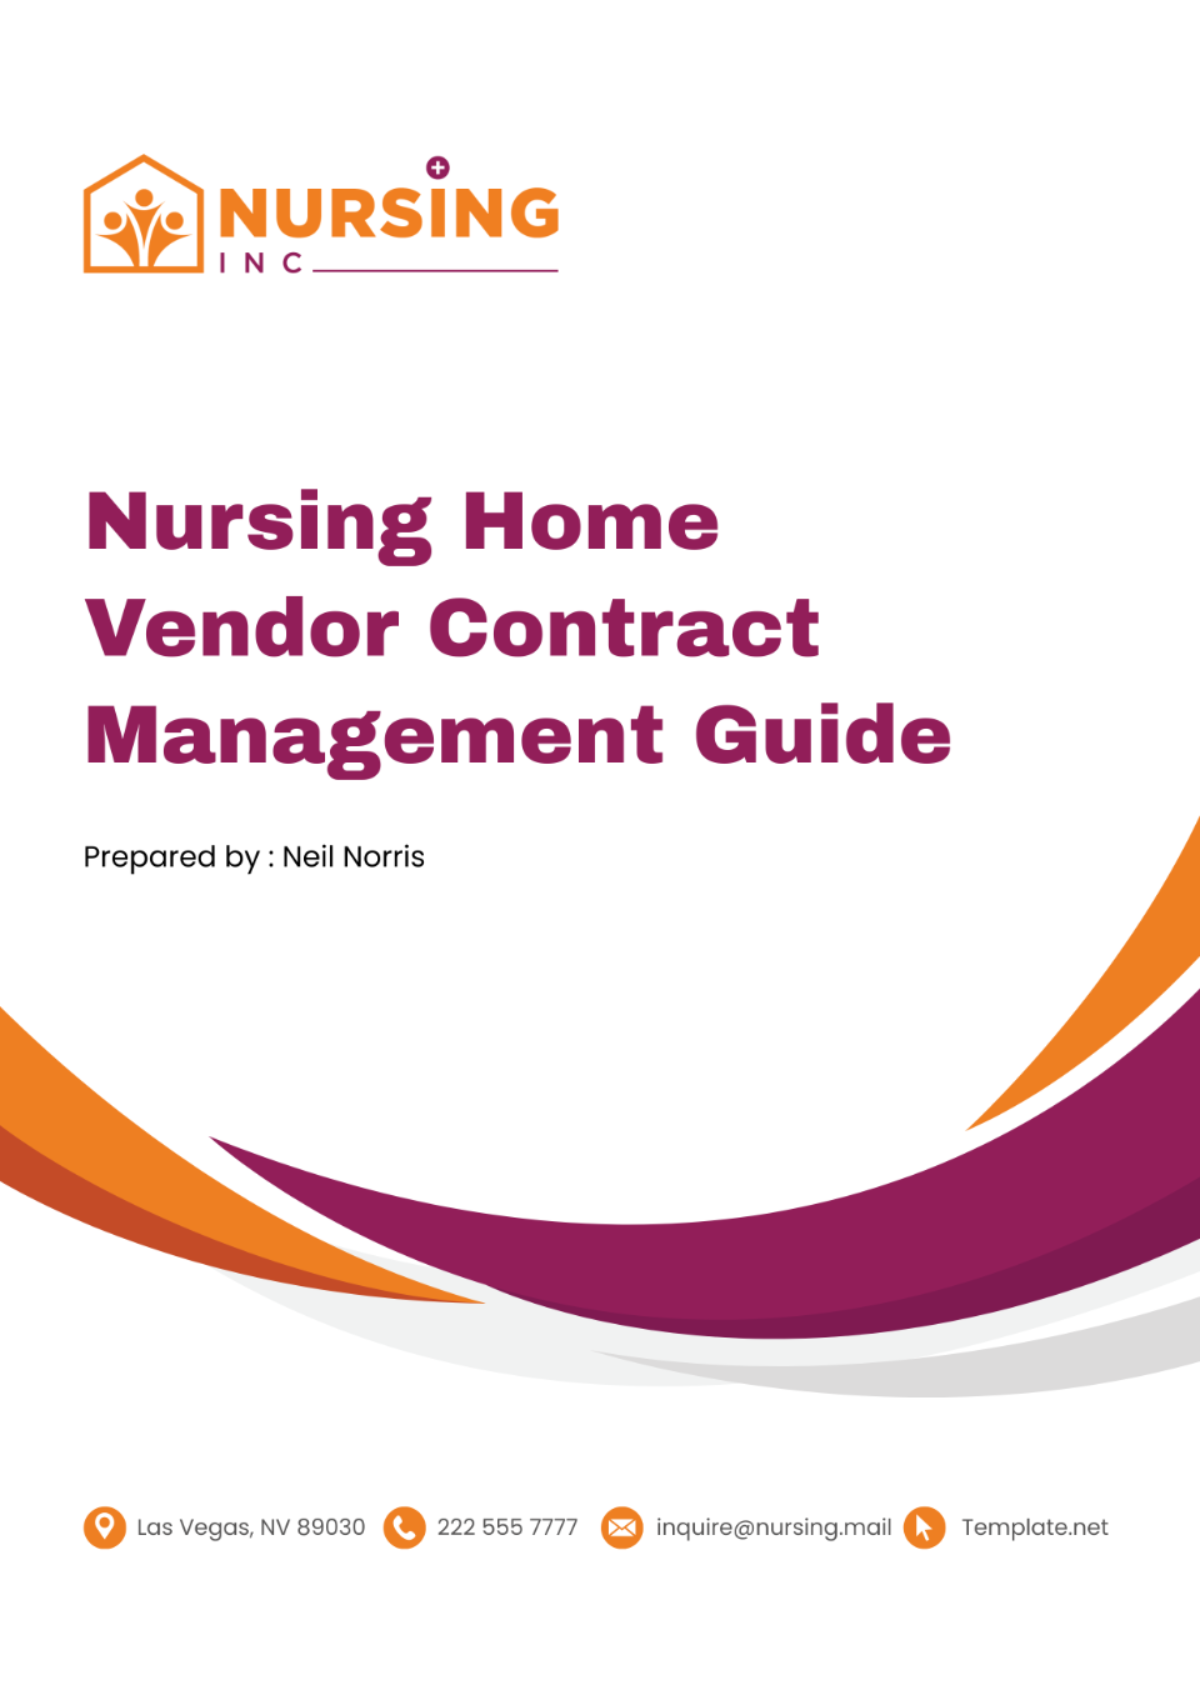 Nursing Home Vendor Contract Management Guide Template